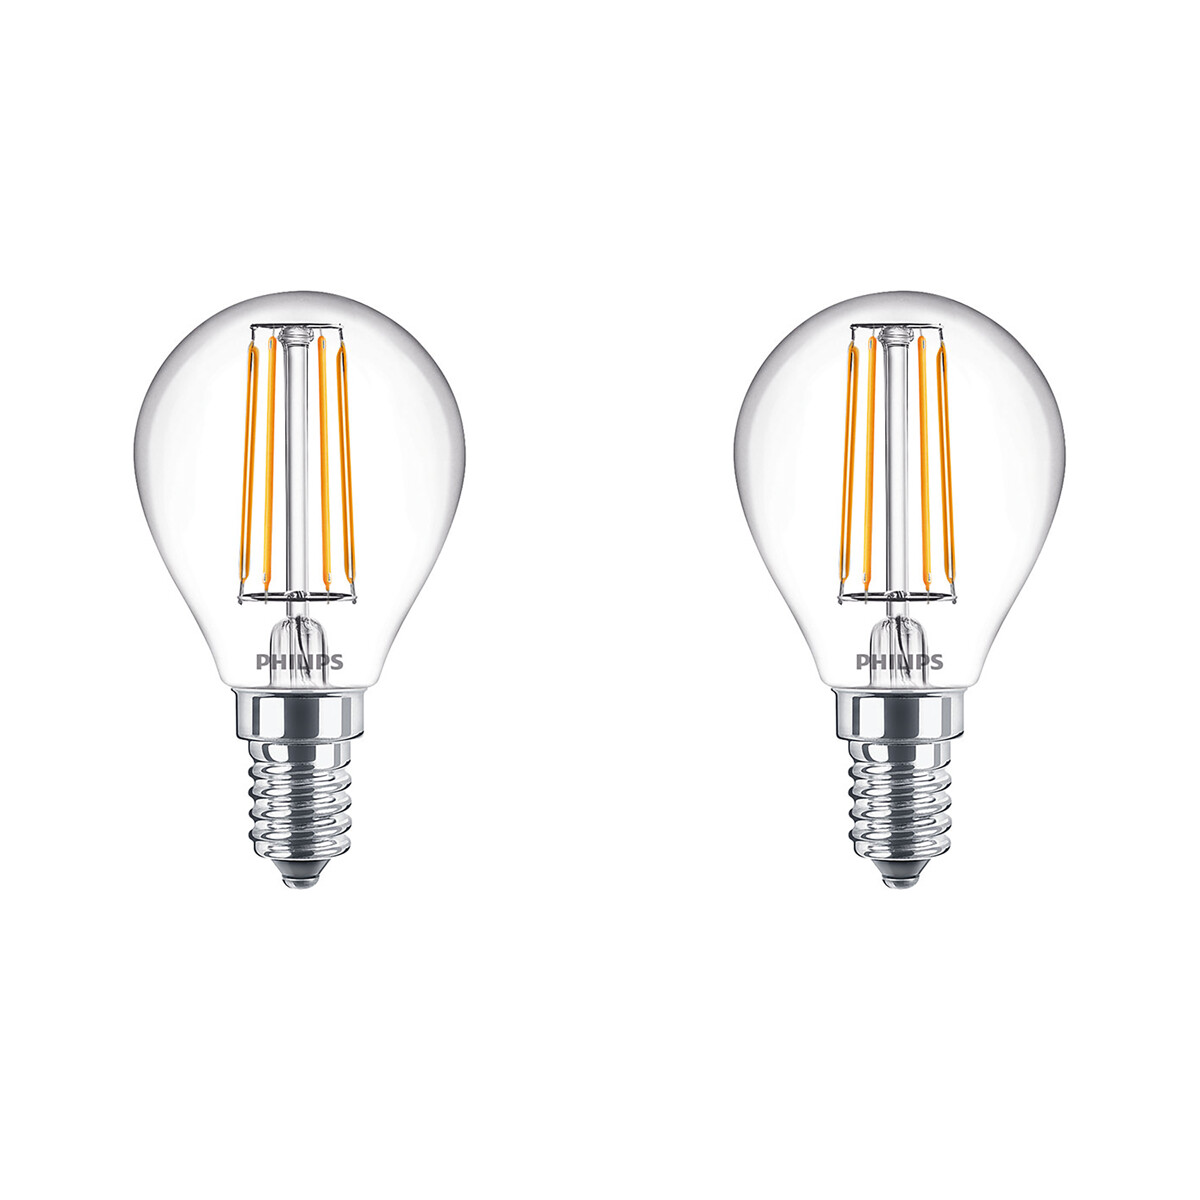 PHILIPS - LED Lamp Filament - Set 2 Stuks - Classic Lustre 827 P45 CL - E14 Fitting - 4.3W - Warm Wi